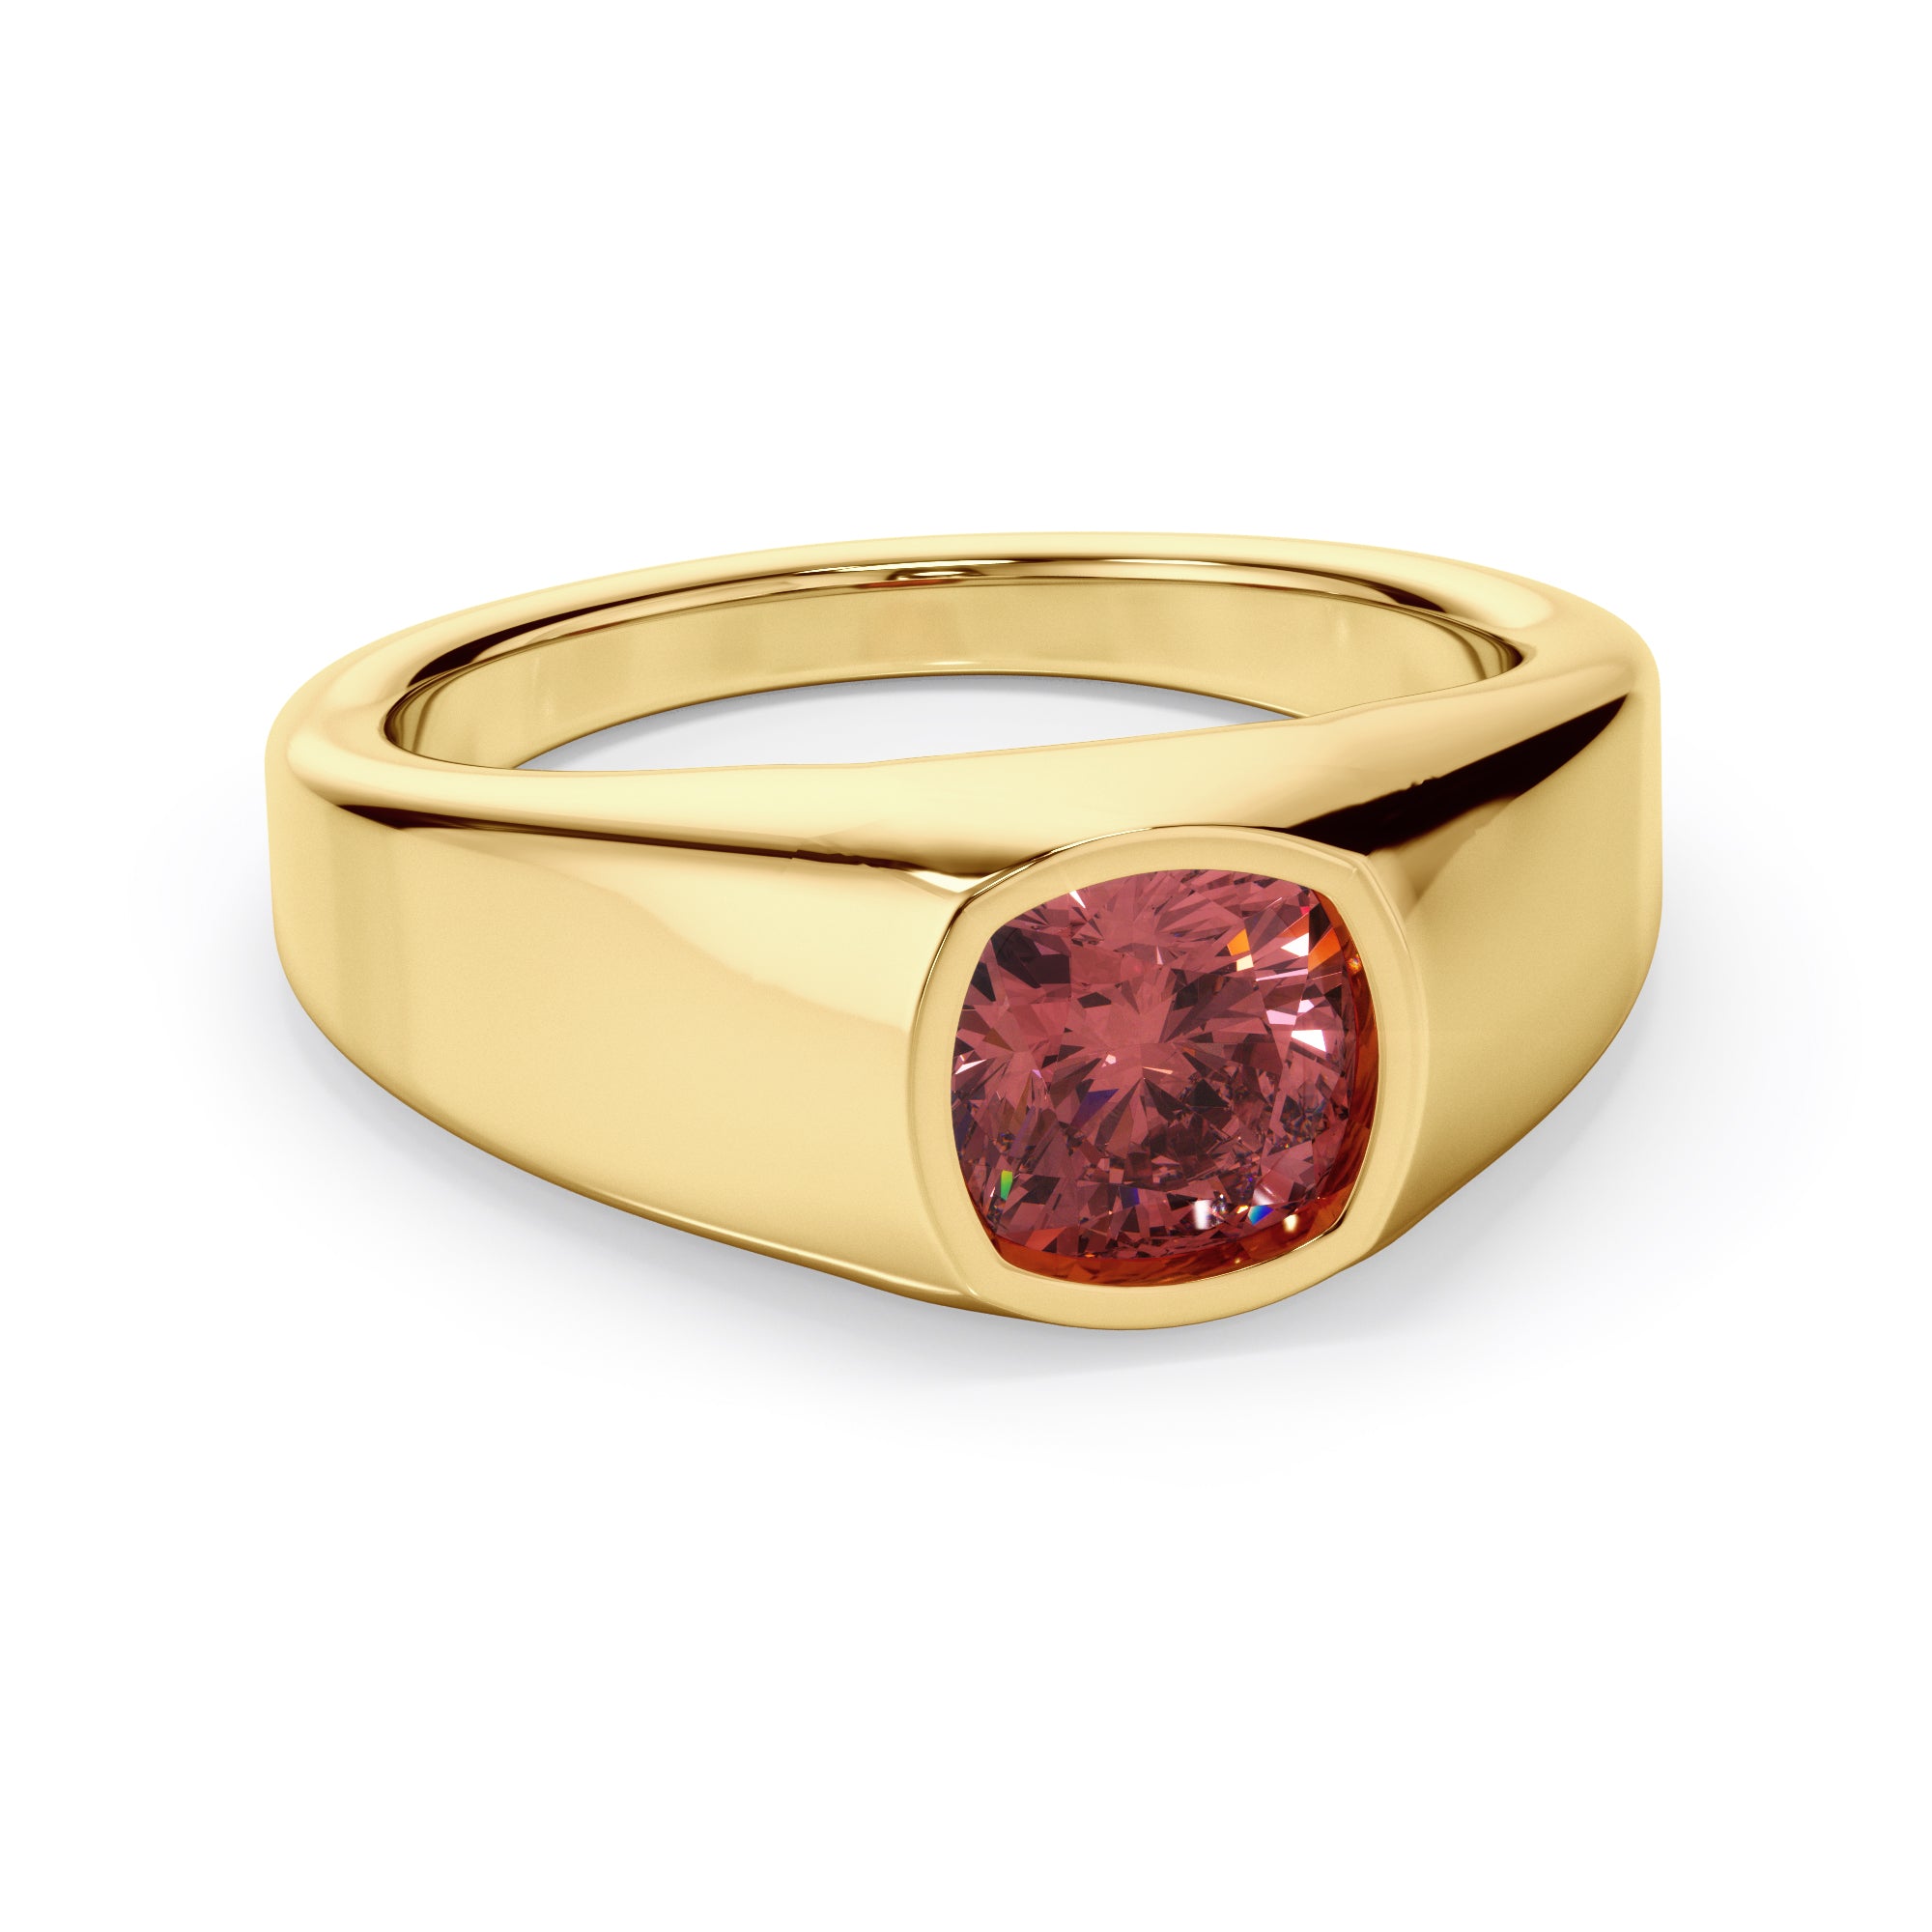 18ct Yellow Gold Coloured Gemstone Signet Ring